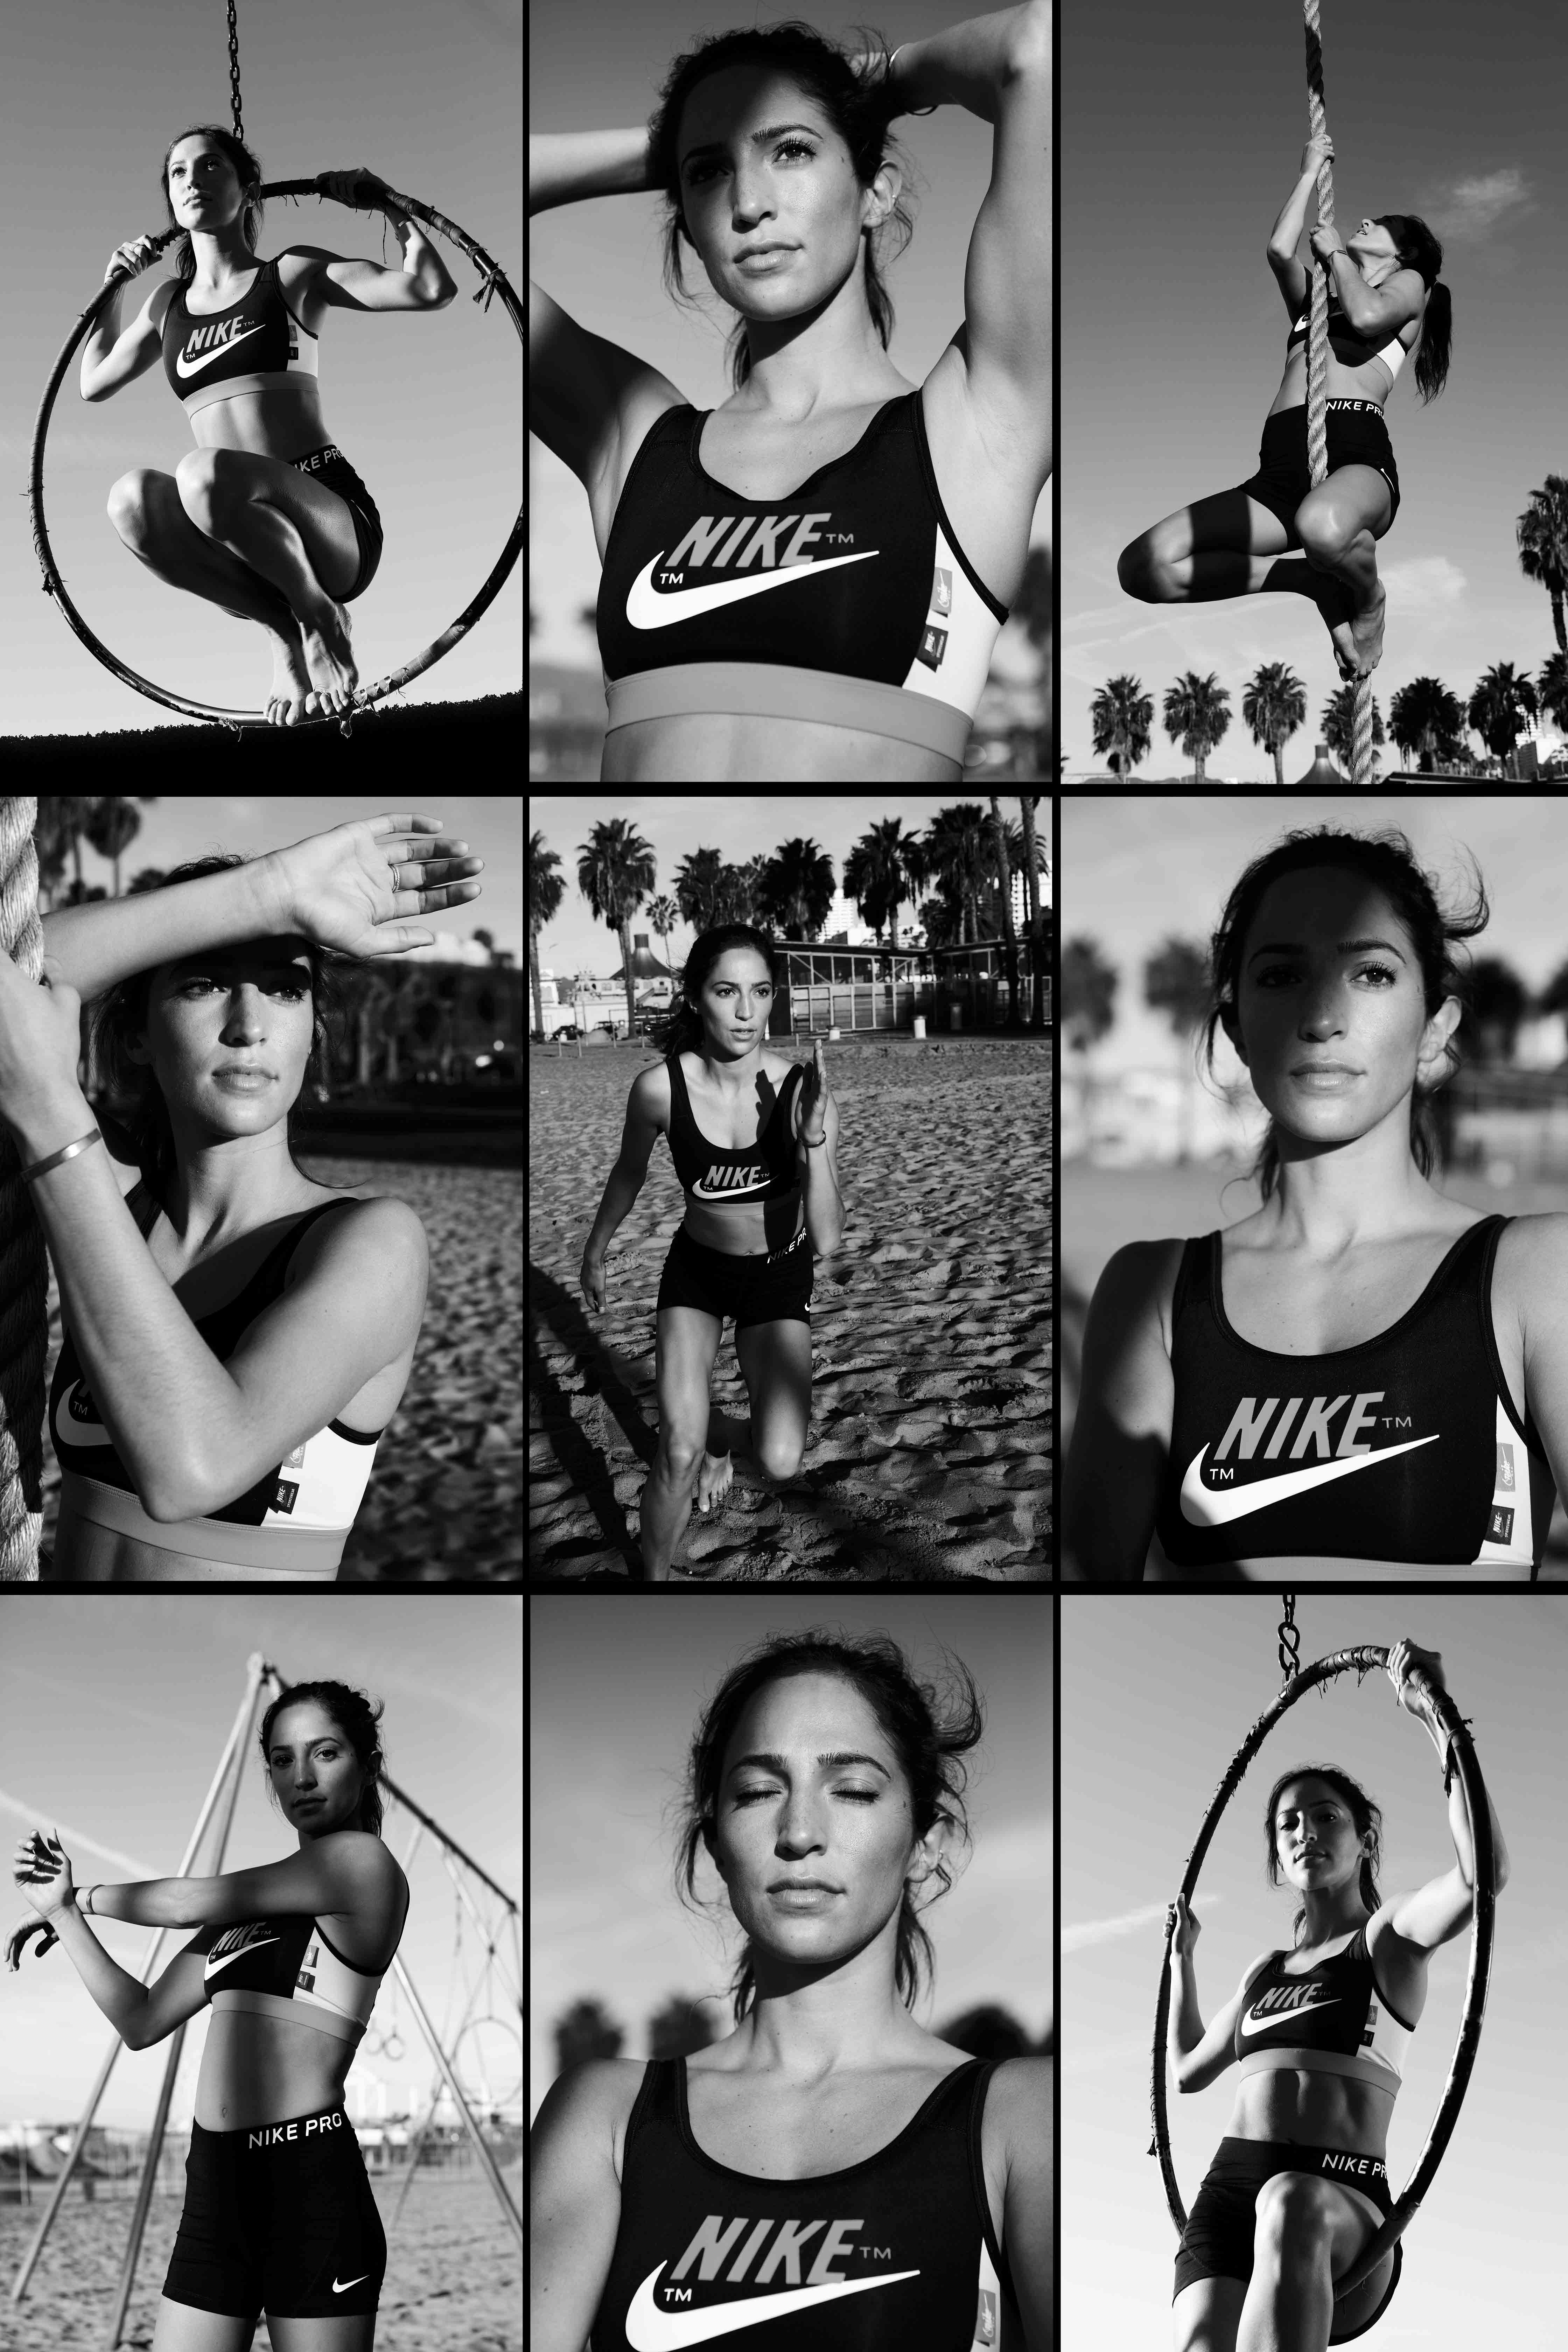 Laura-Nike-AldoChacon-x9web